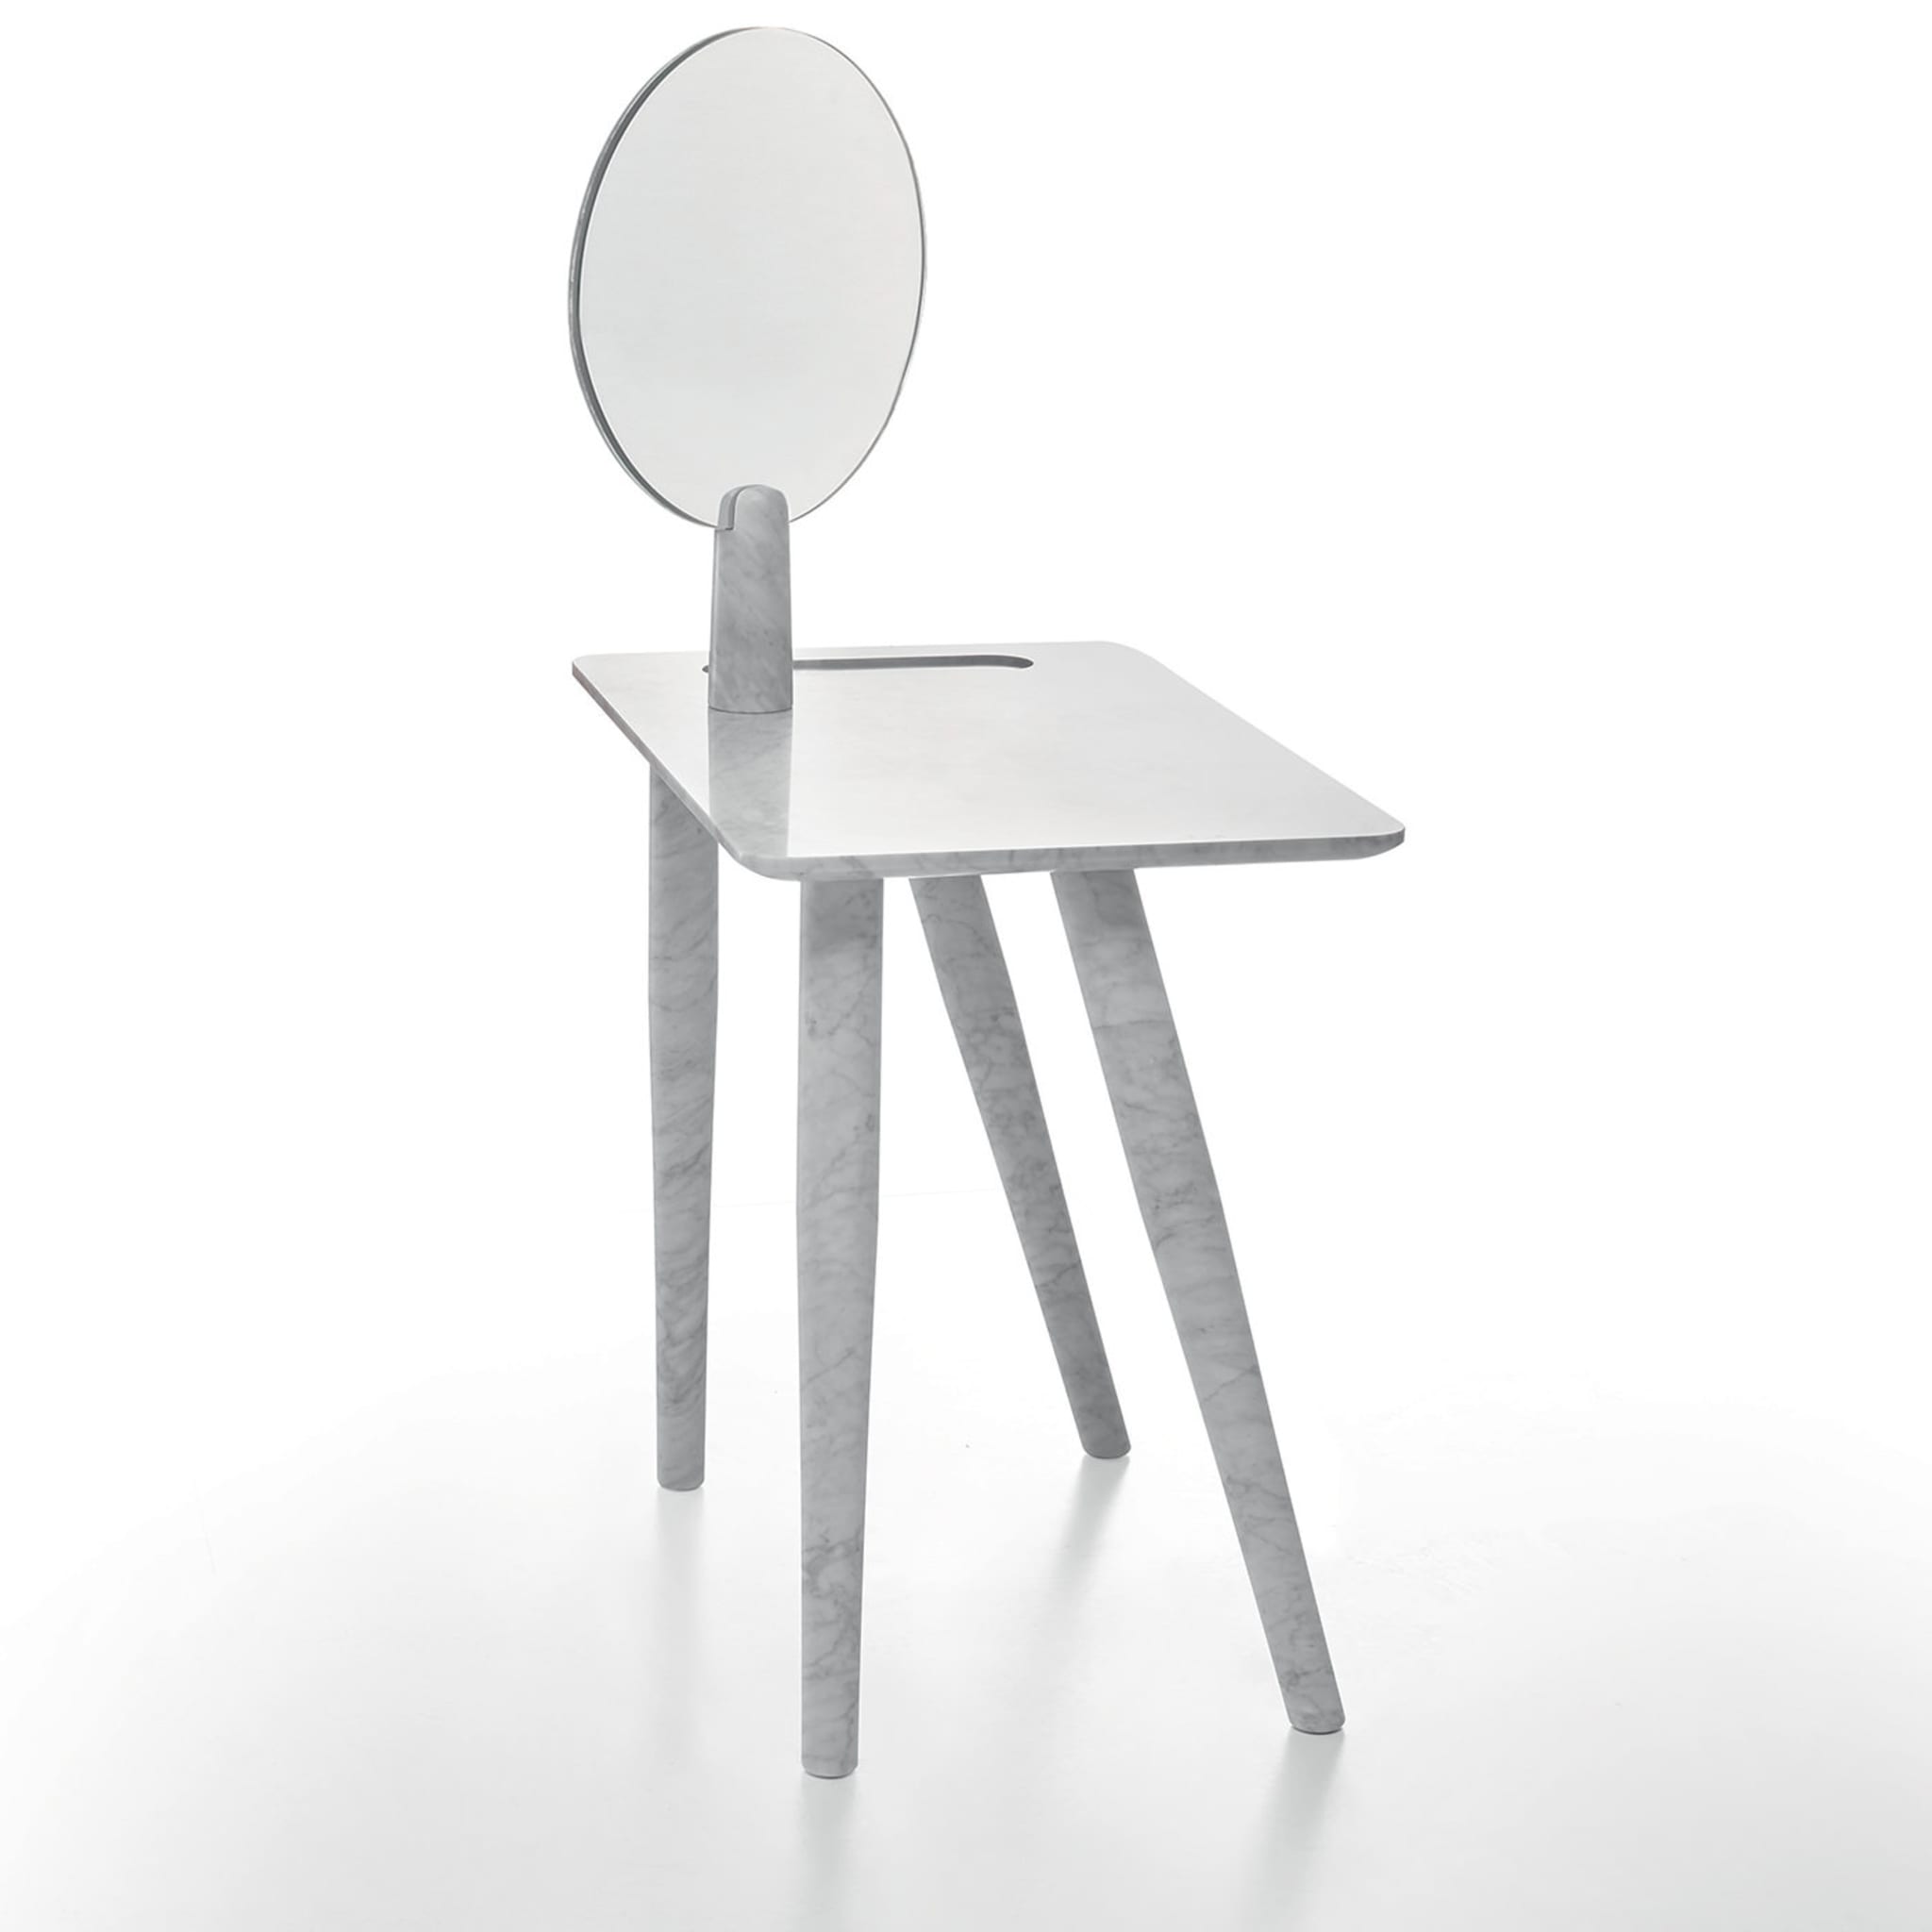 ISA DRESSING TABLE - Design Maddalena Casadei, Marialaura Rossiello Irvine 2014 - Alternative view 1